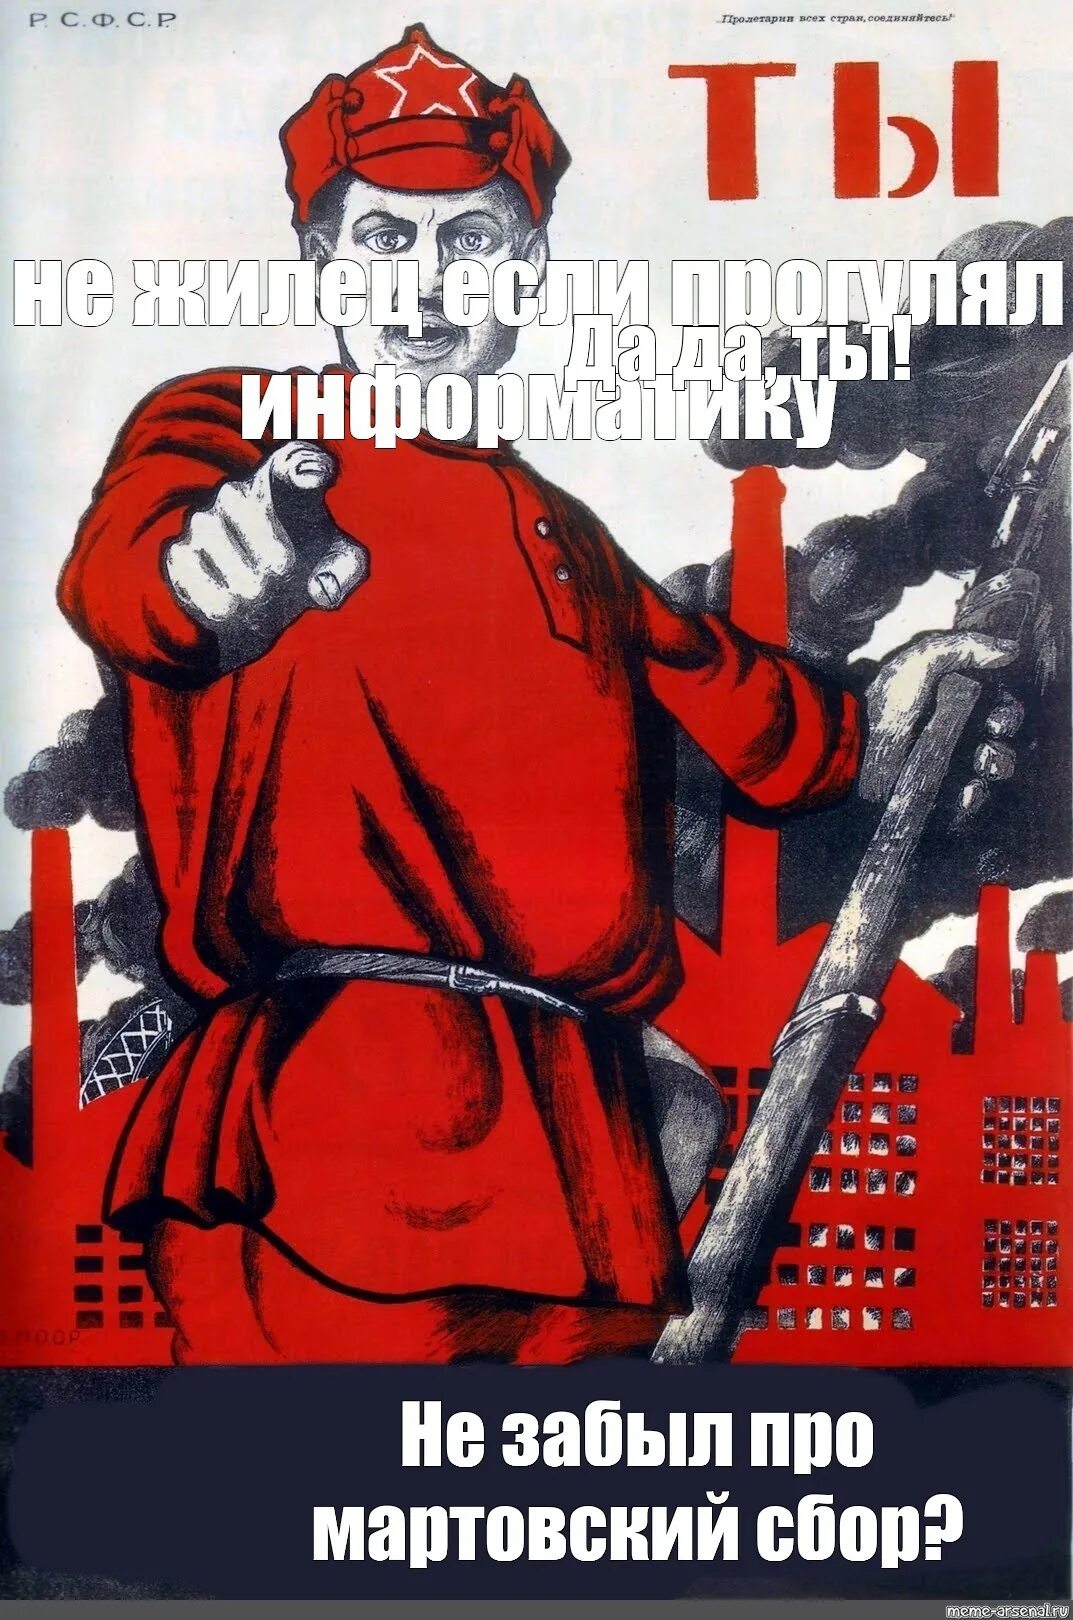 Не забывай. Советский плакат а ты. Плакат СССР А ты записался добровольцем. Д Моор ты записался добровольцем. Плакат а ты не забыл.